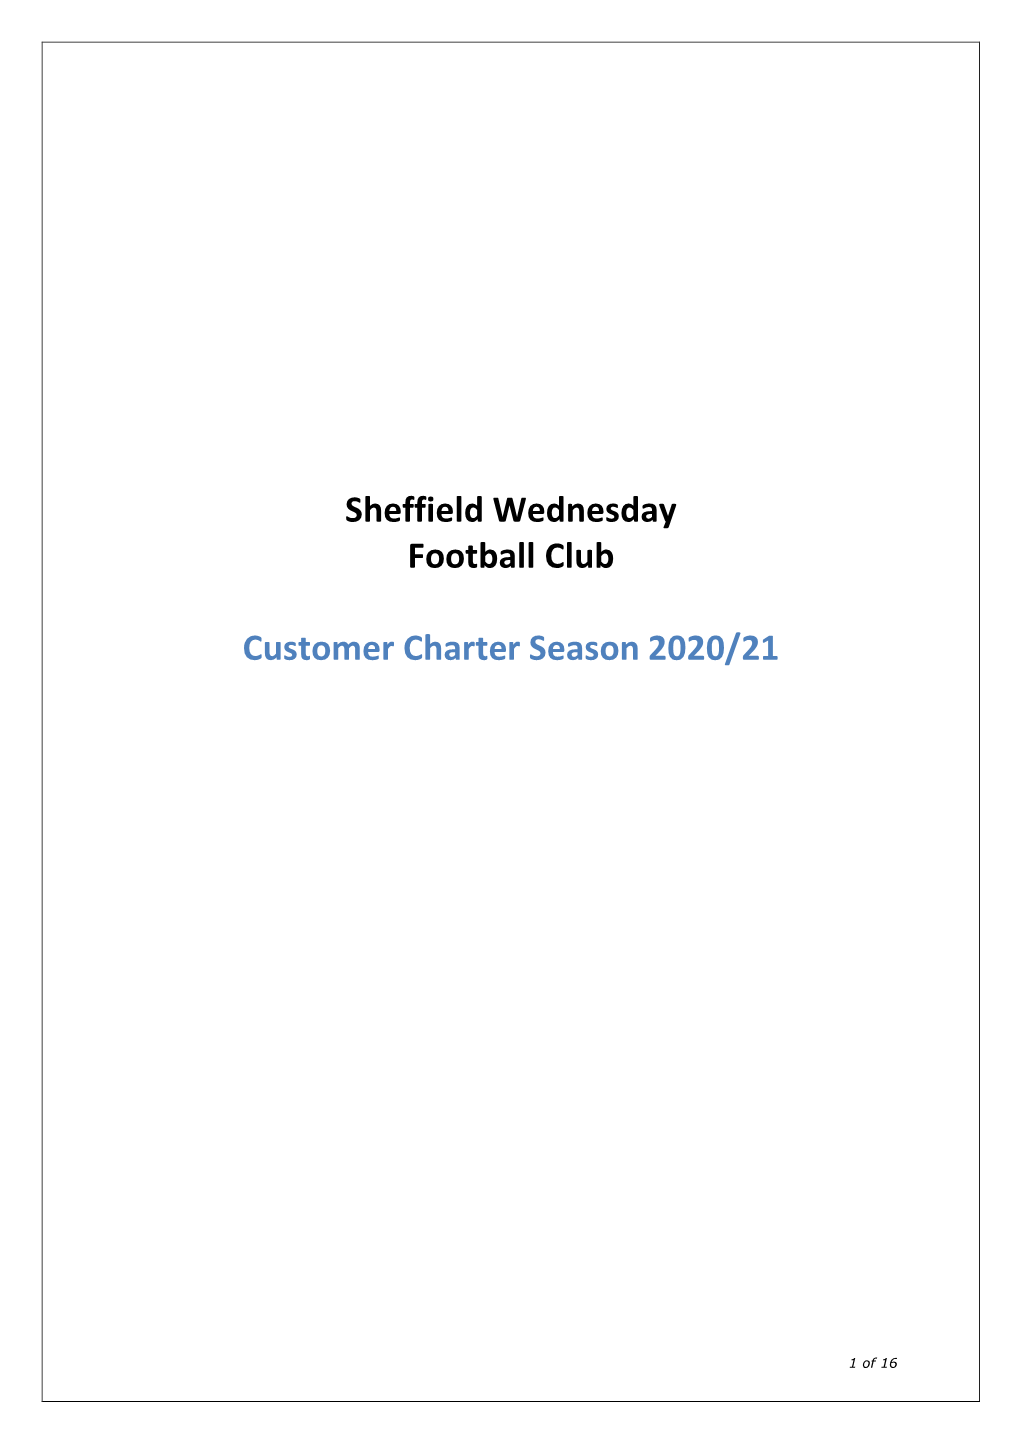 Sheffield Wednesday Football Club Customer Charter Season 2020/21